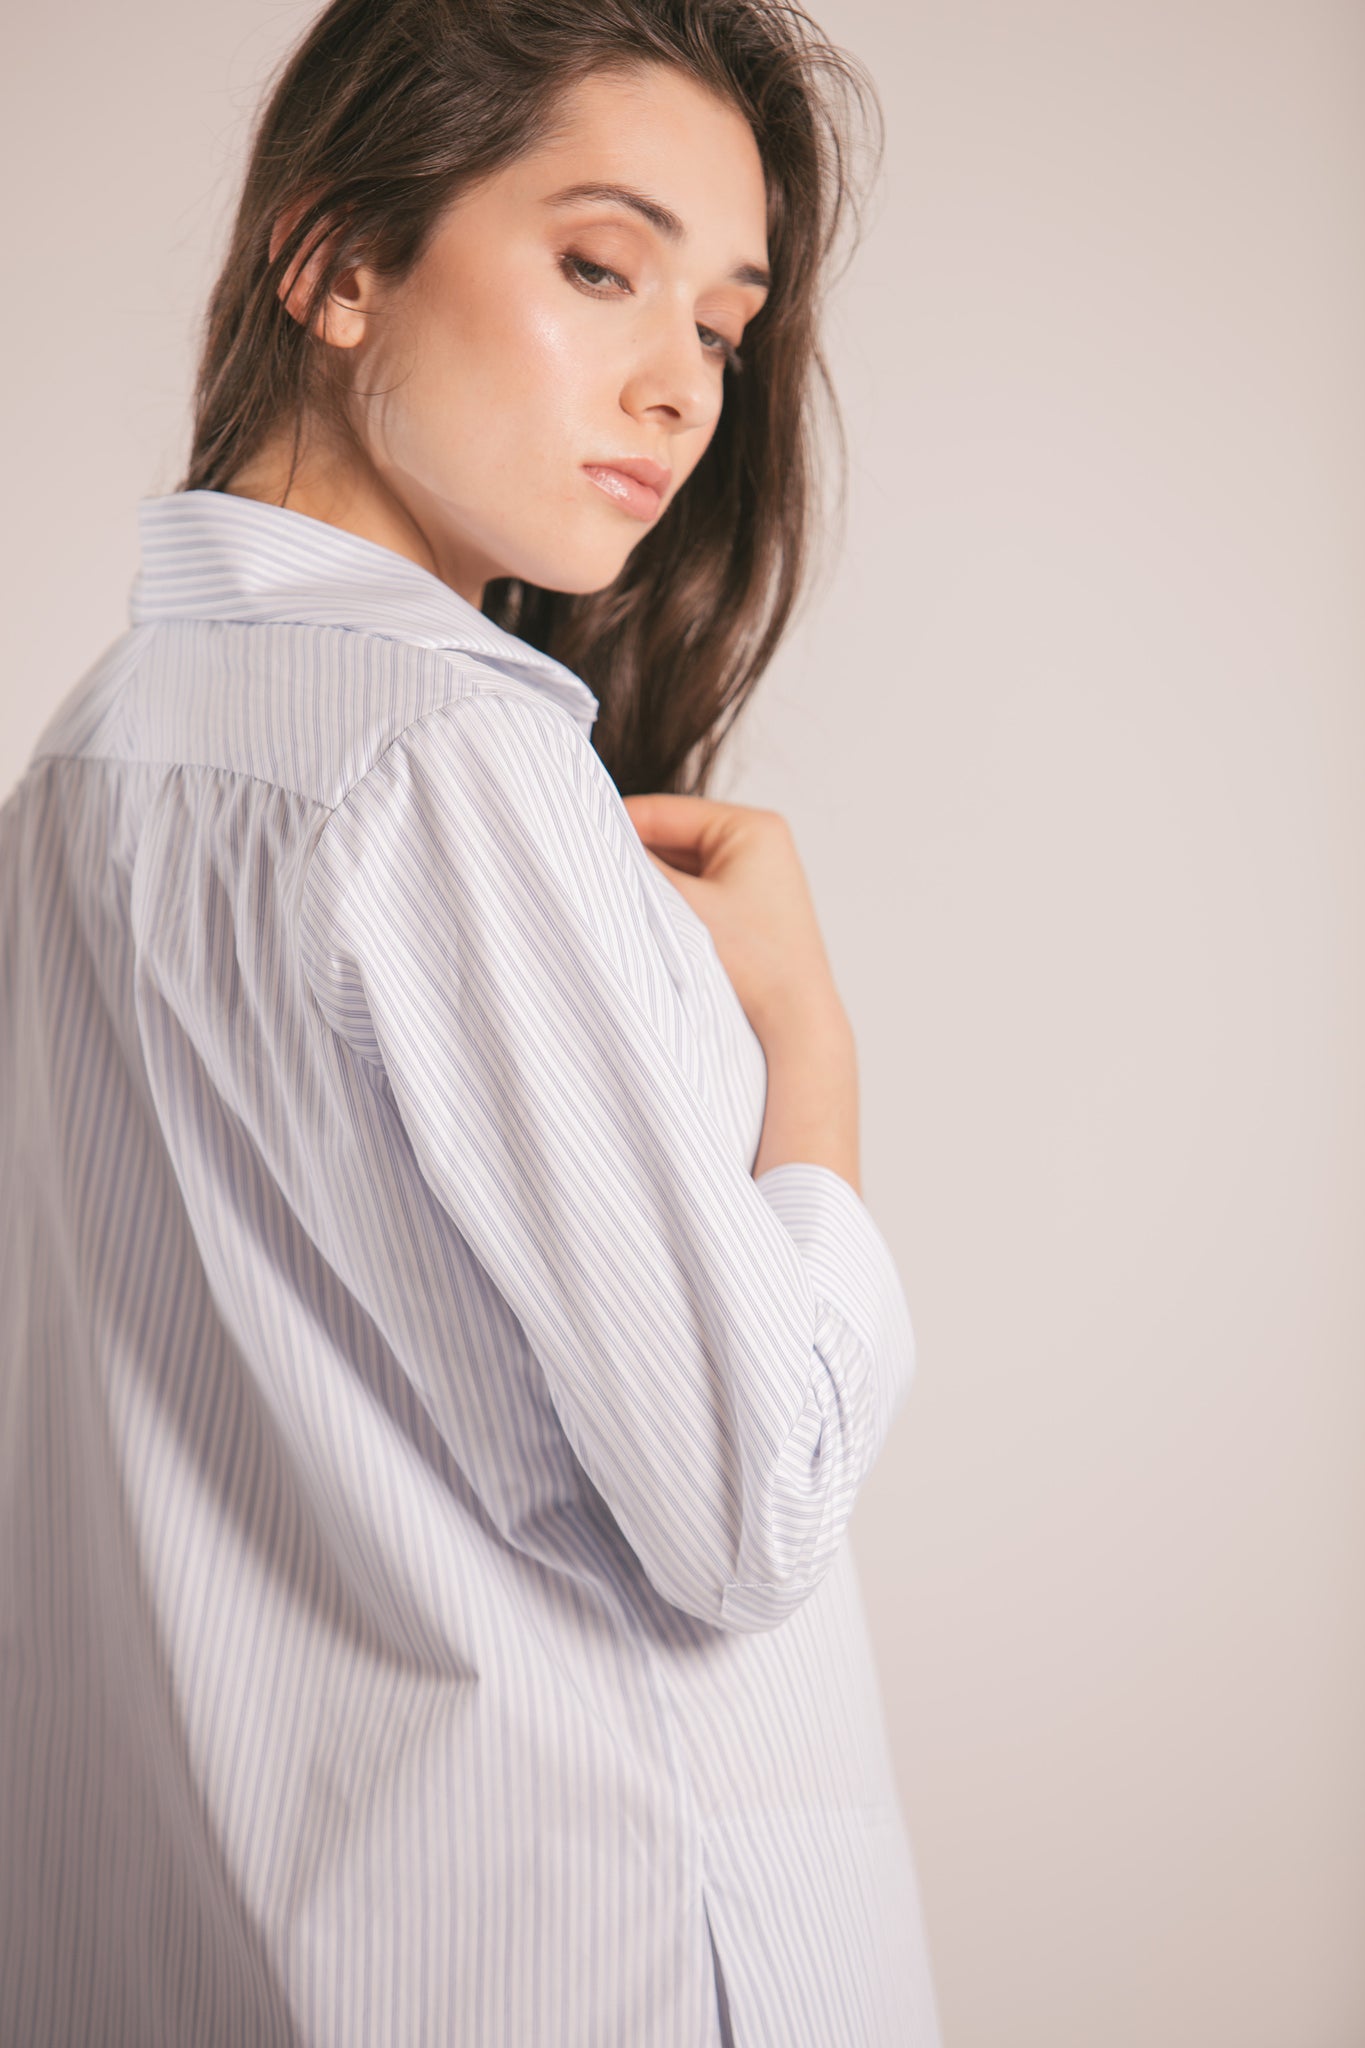 RYAN ¾ Sleeve Shirtdress - White and Blue Stripe